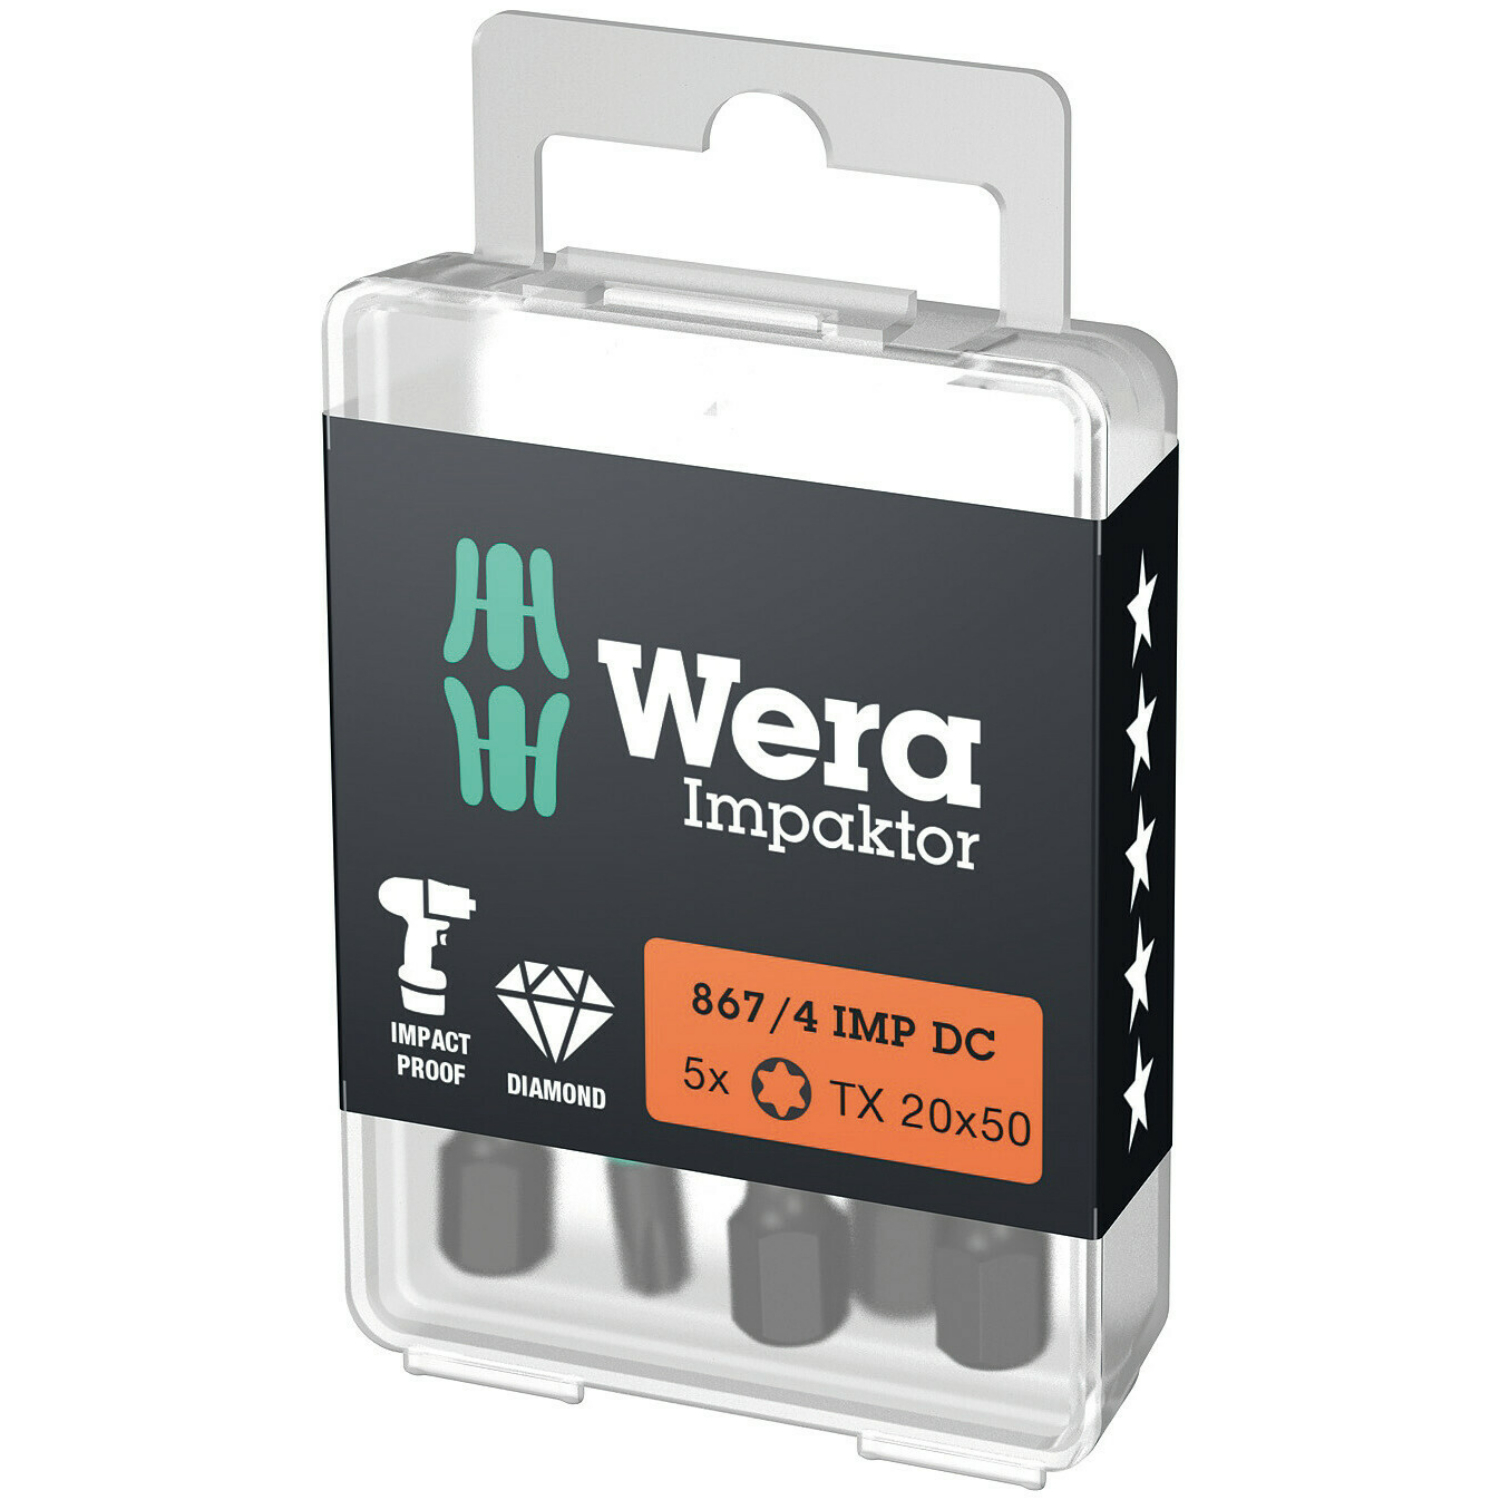 Wera 867/4 Embouts TORX® IMP DC Impaktor, TX 20 x 50 mm, 5 pièces-image